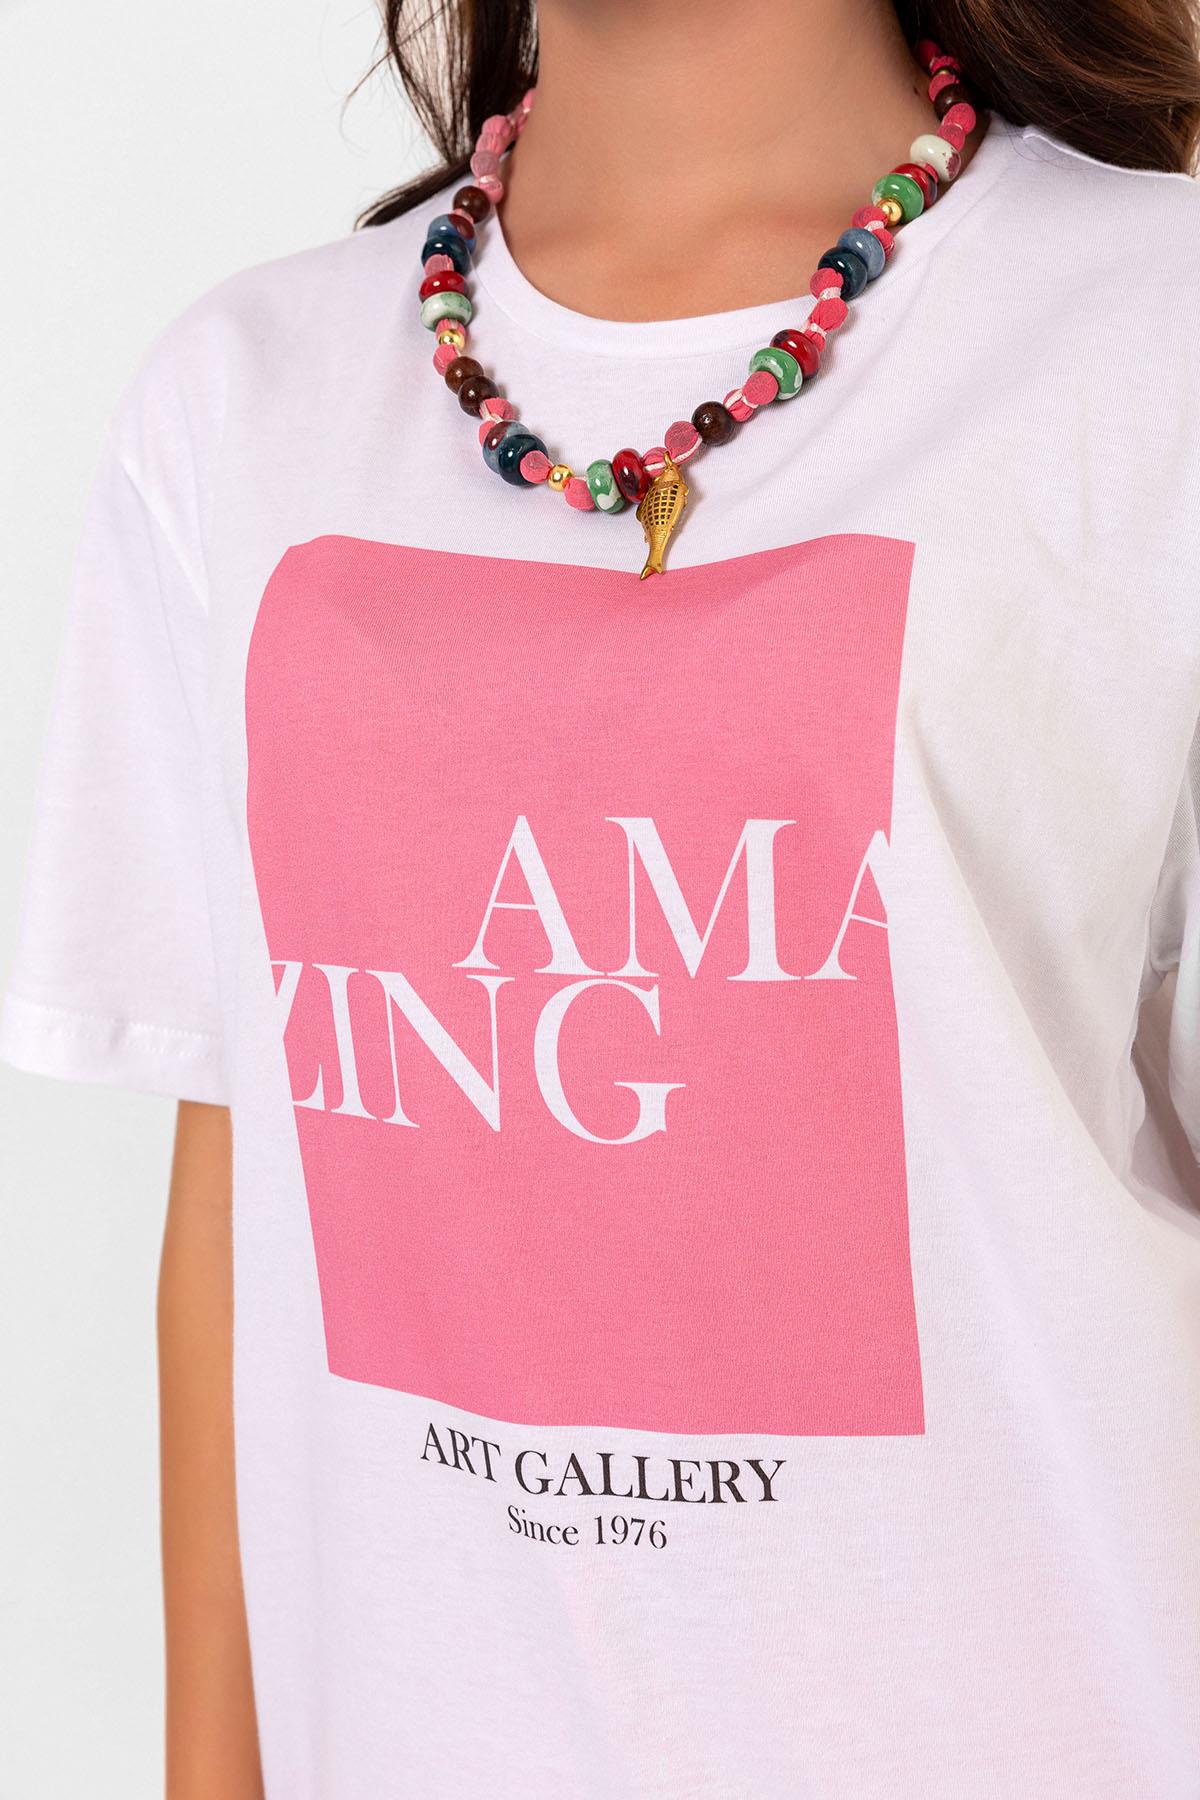 Crew Neck pink amazing art printed white overwoman female T -shirt